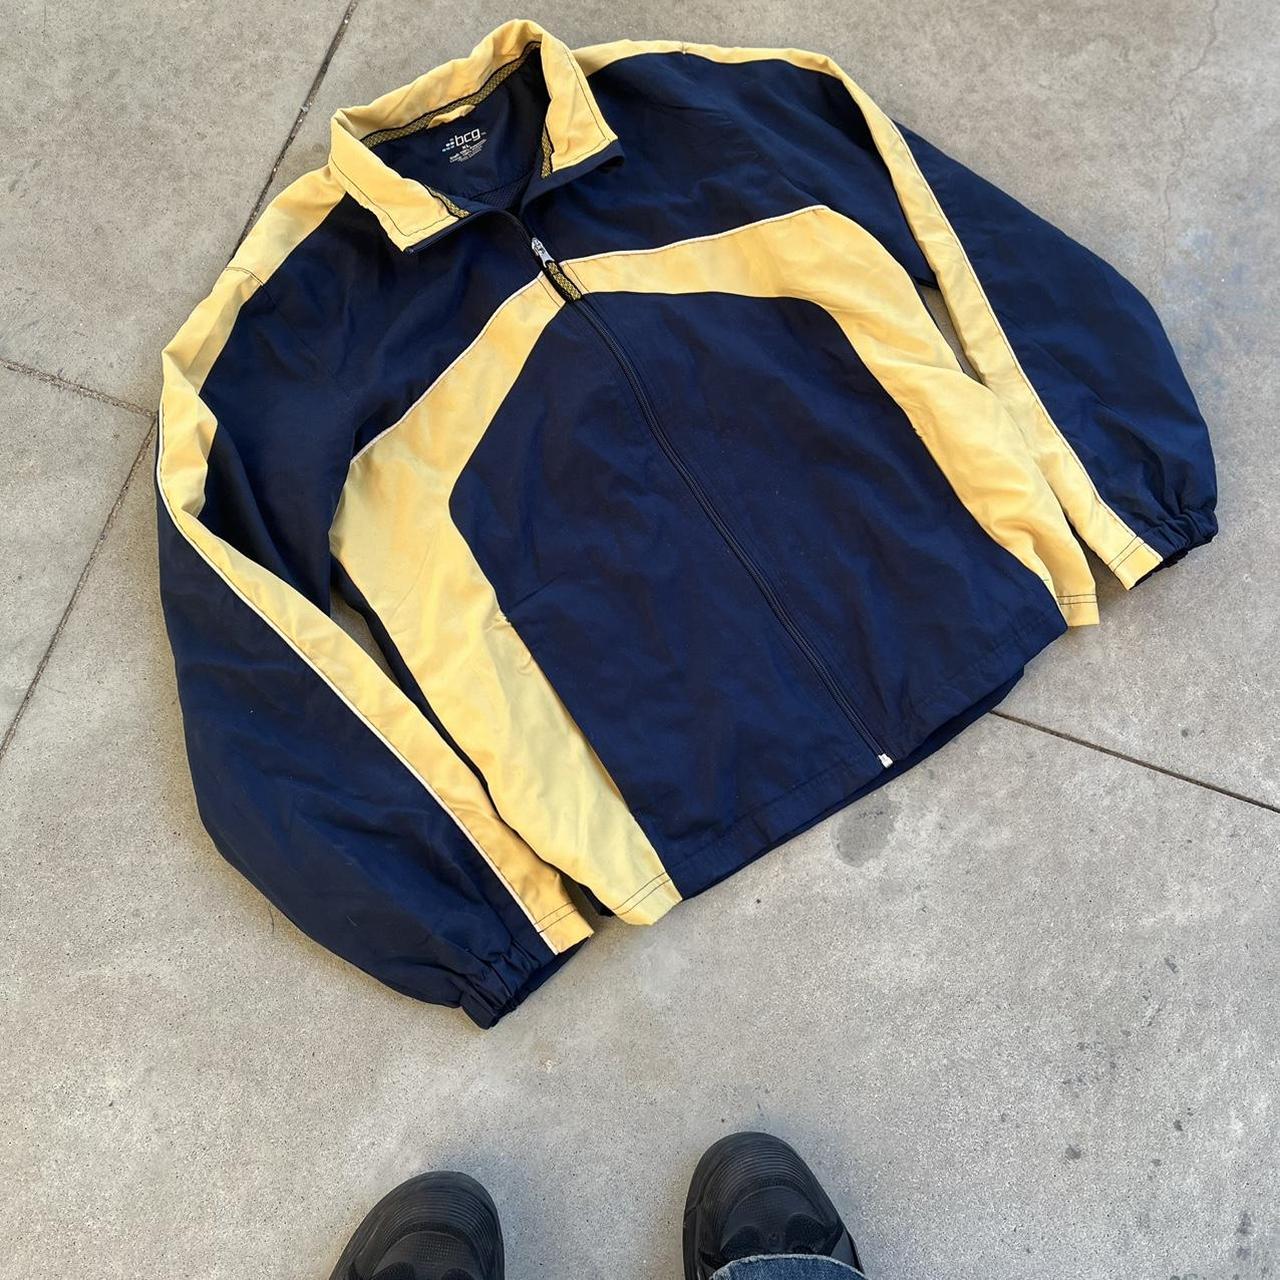 Vintage 2000s BCG track jacket Size XL No... - Depop